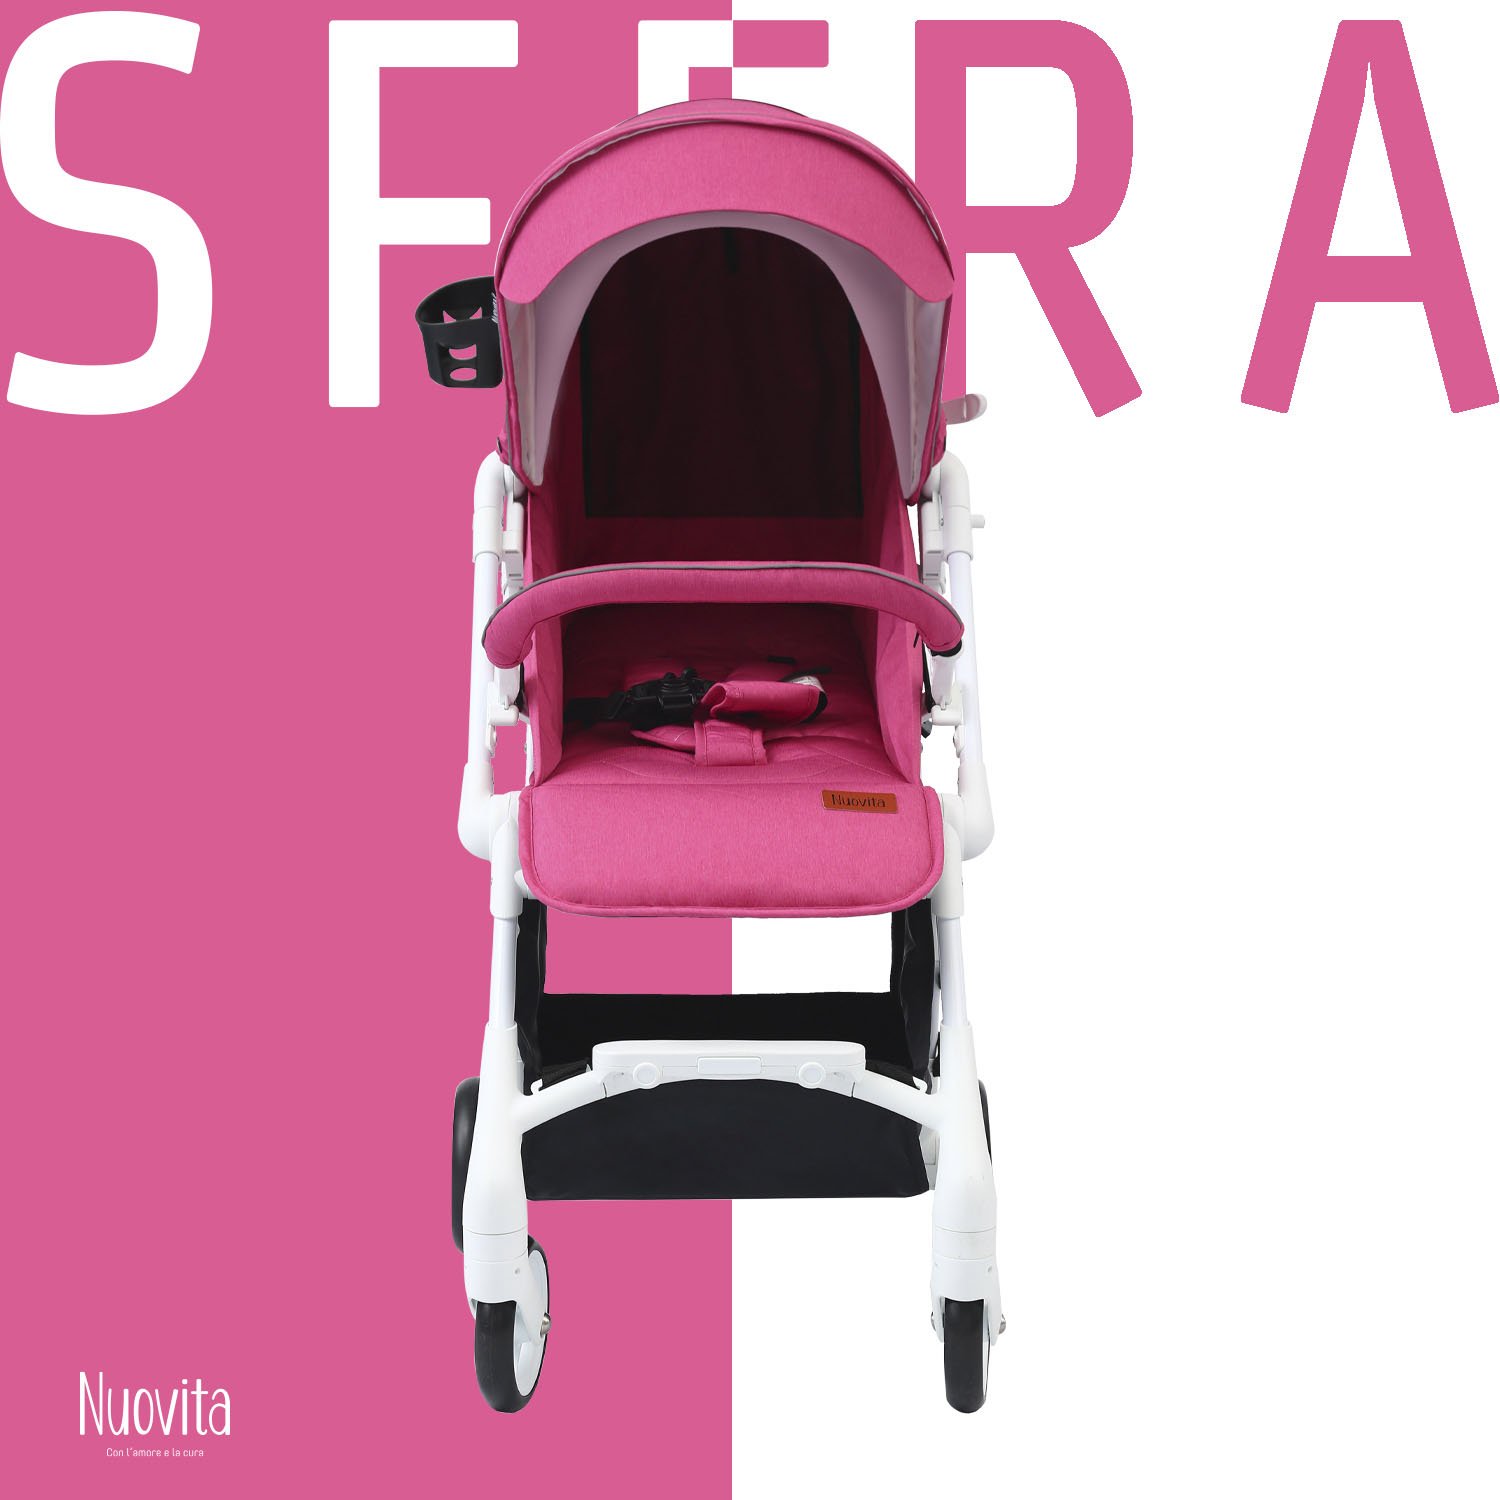 Прогулочная коляска Nuovita Sfera Rosa, Bianco, розовый, белый